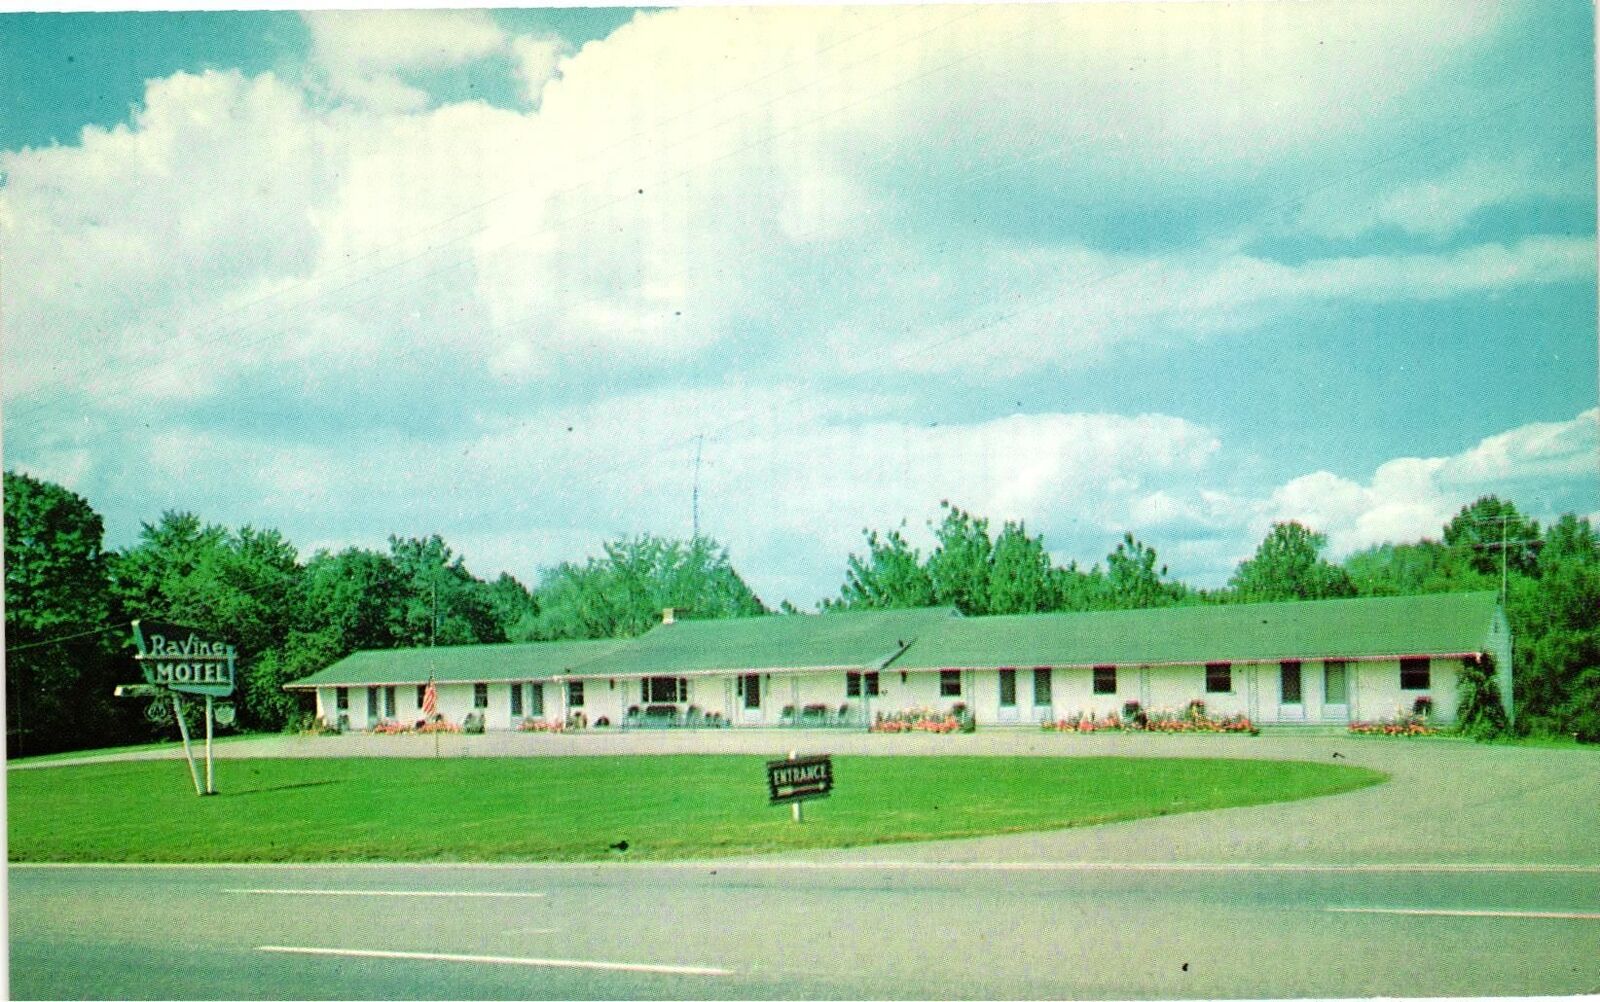 Vintage Postcard- Ravine Motel, Wooster, OH